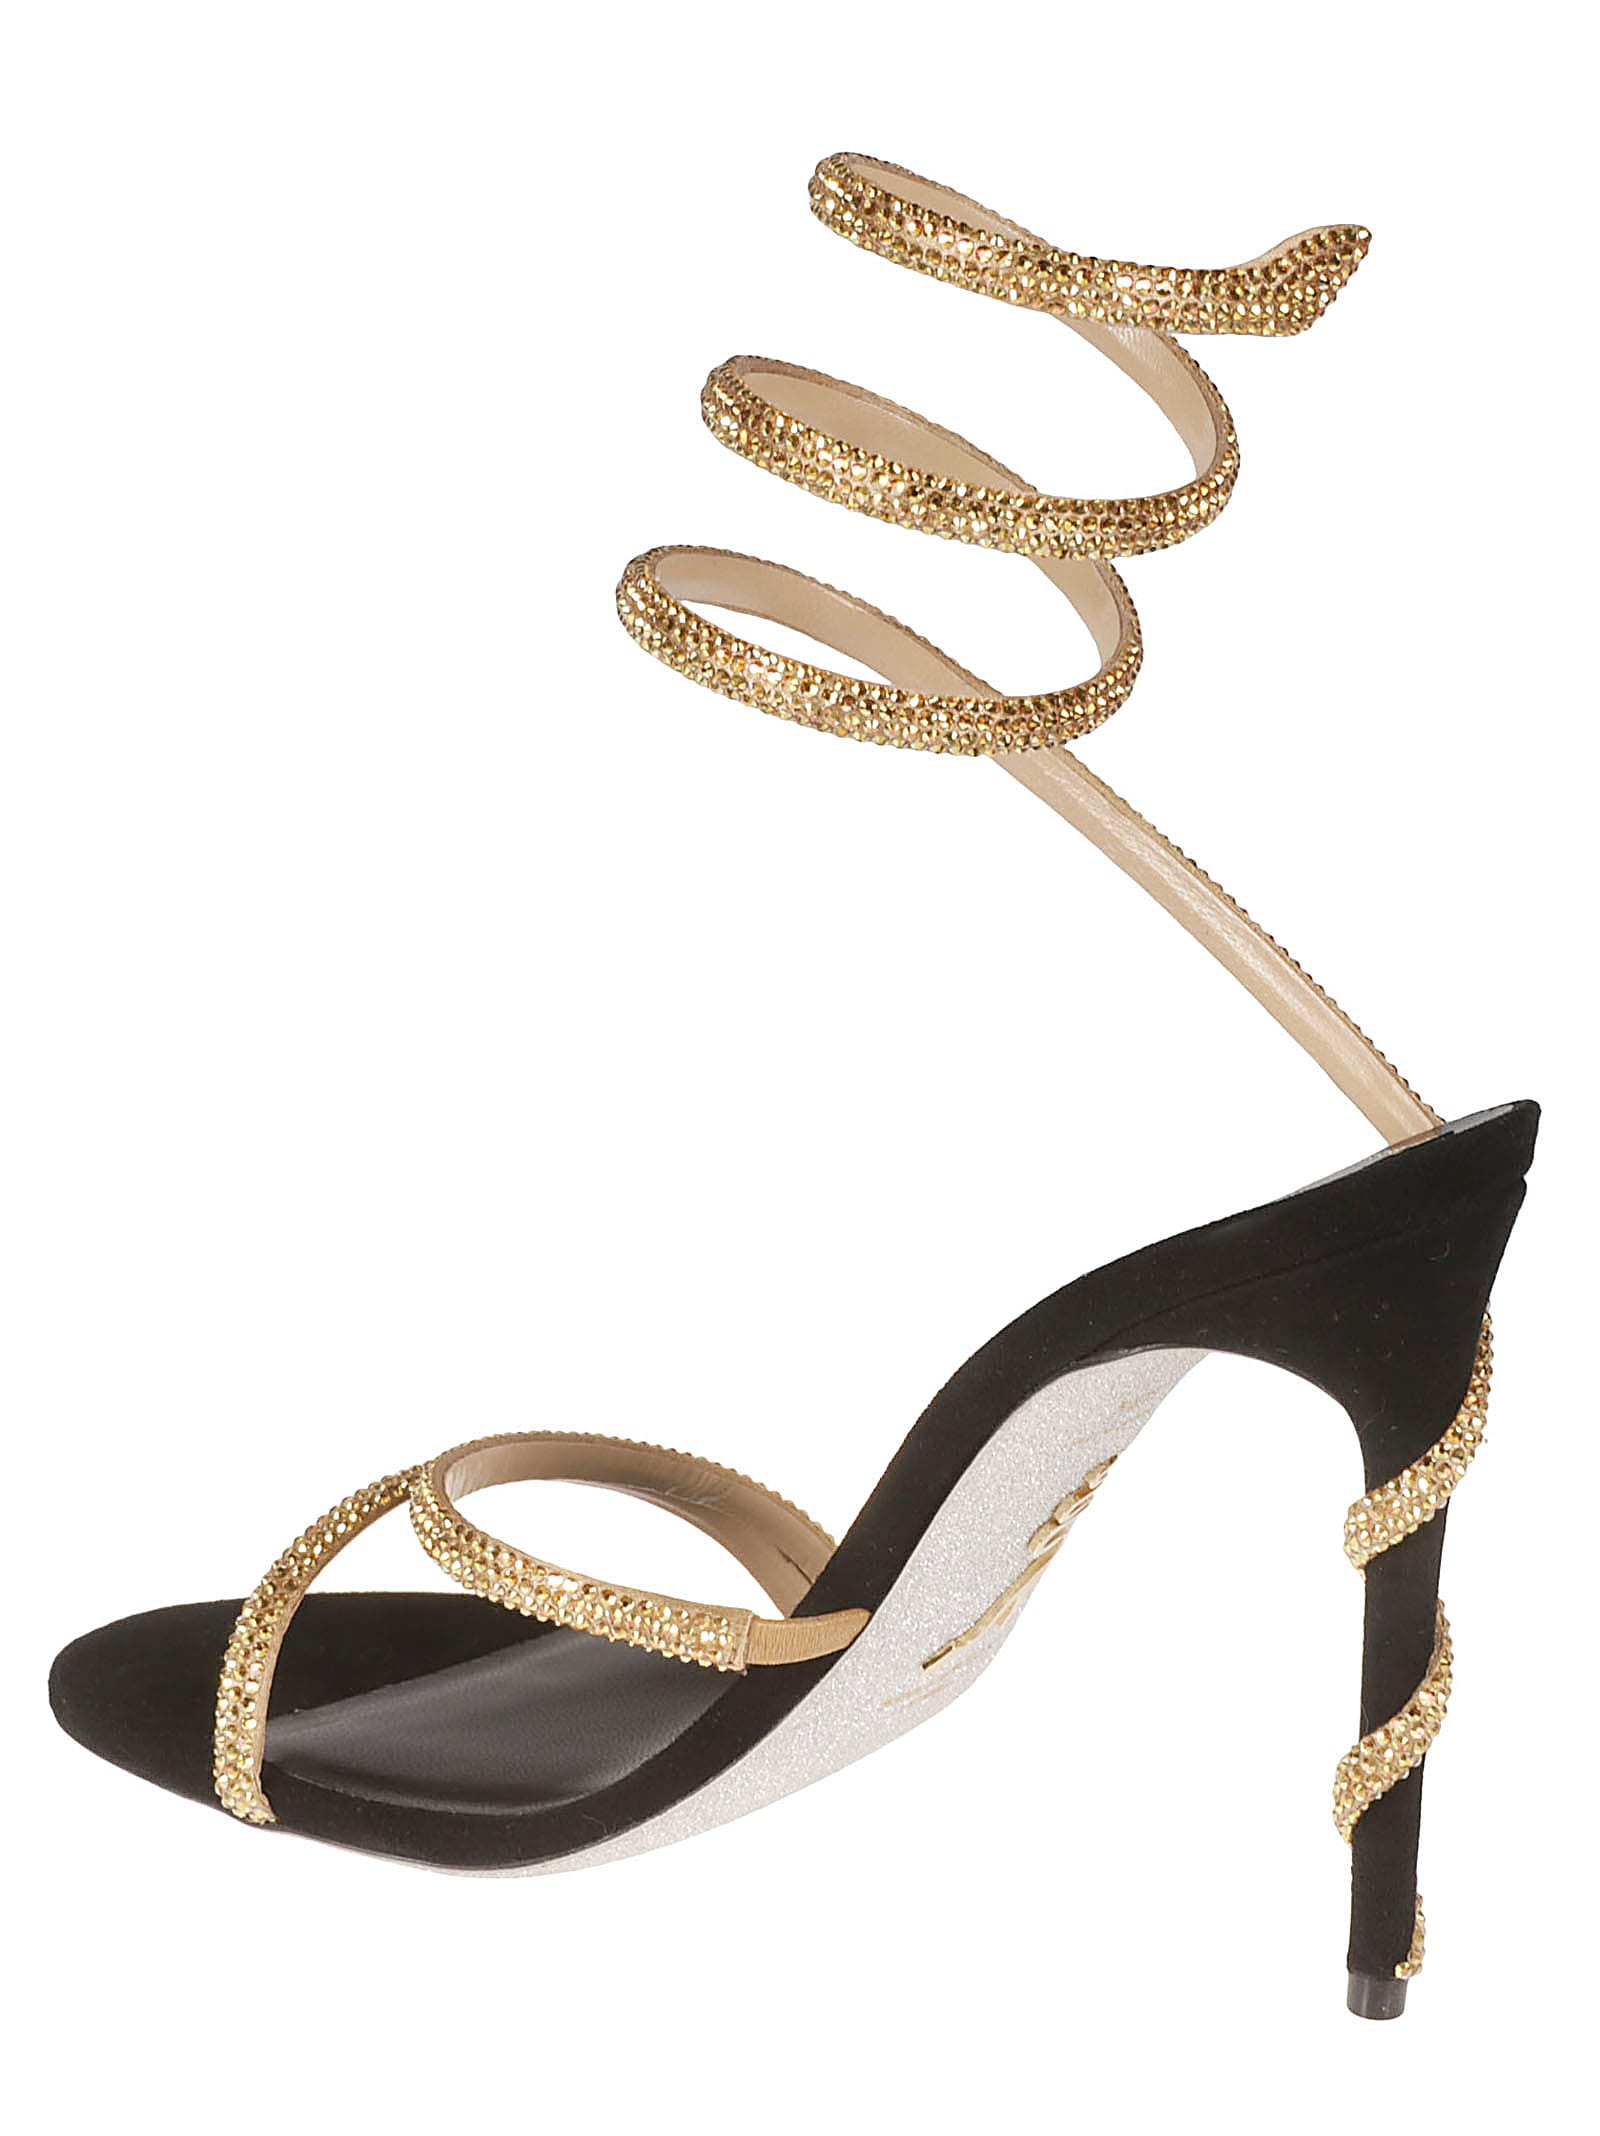 René Caovilla Crystal Embellished Wrap Around Sandals In Black/gold ...